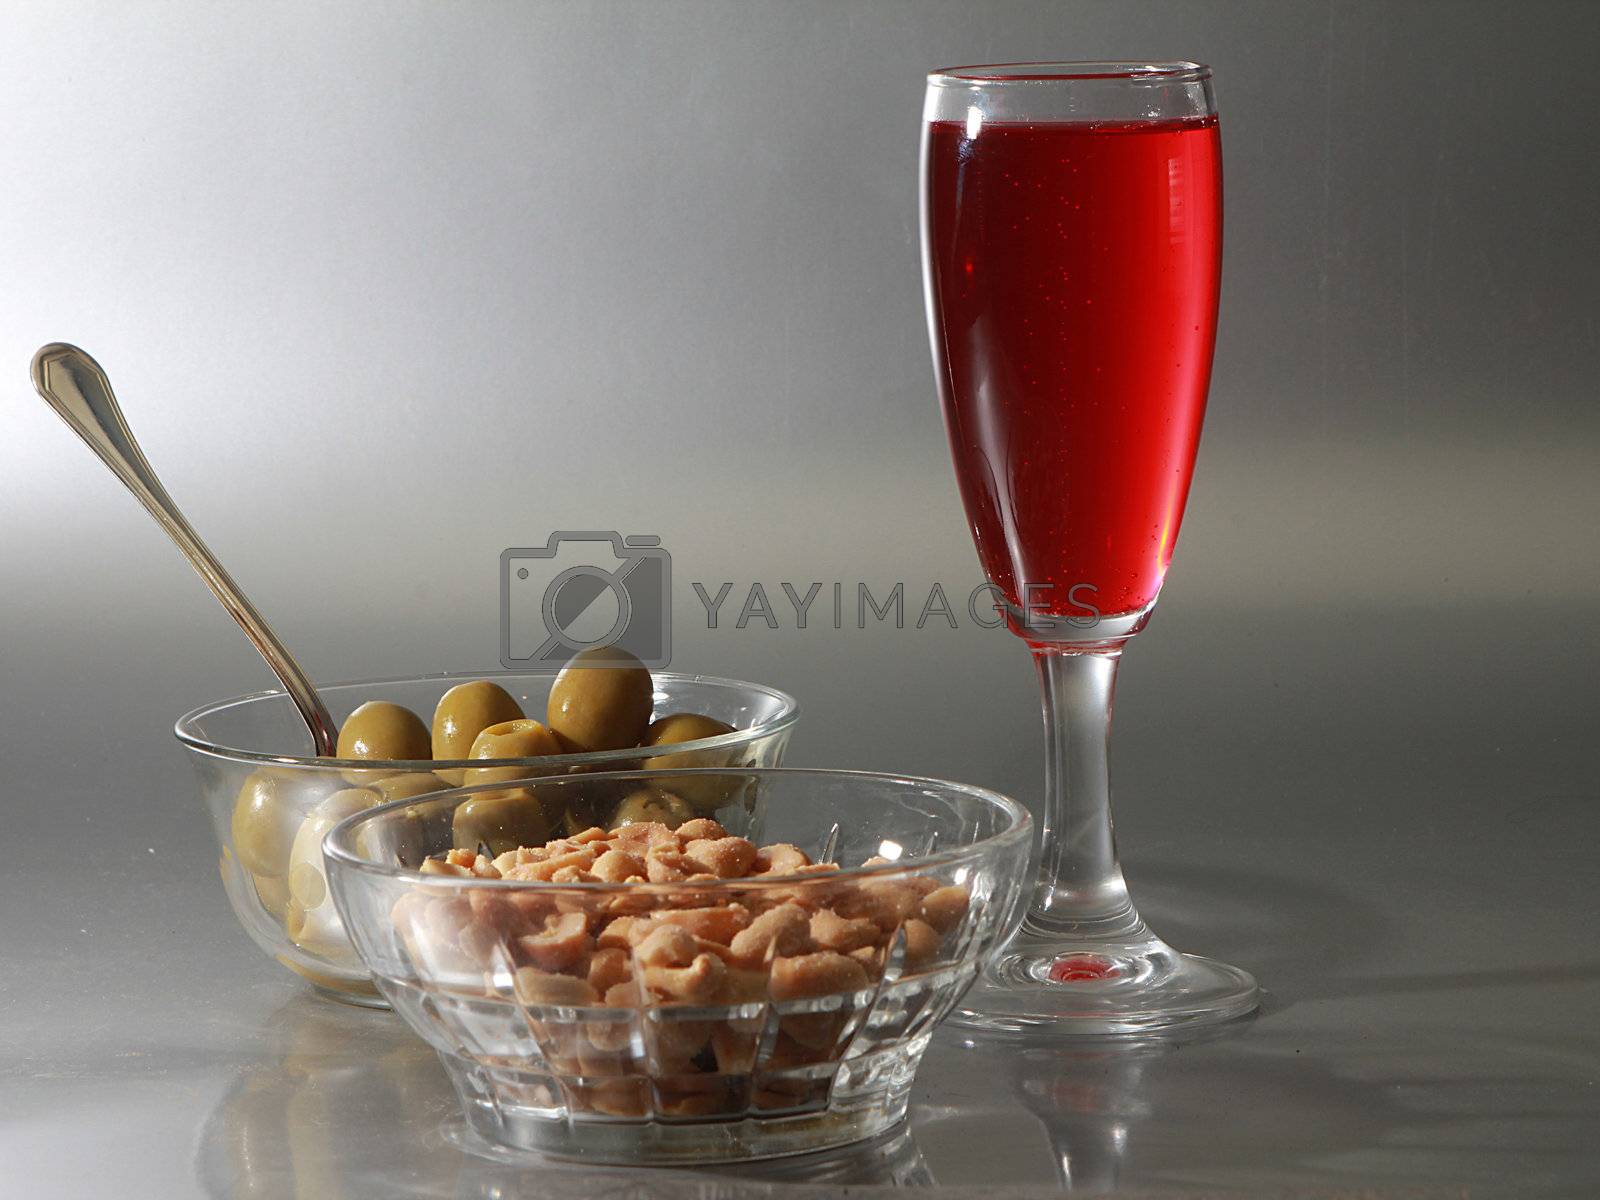 Royalty free image of aperitif by danilobiancalana